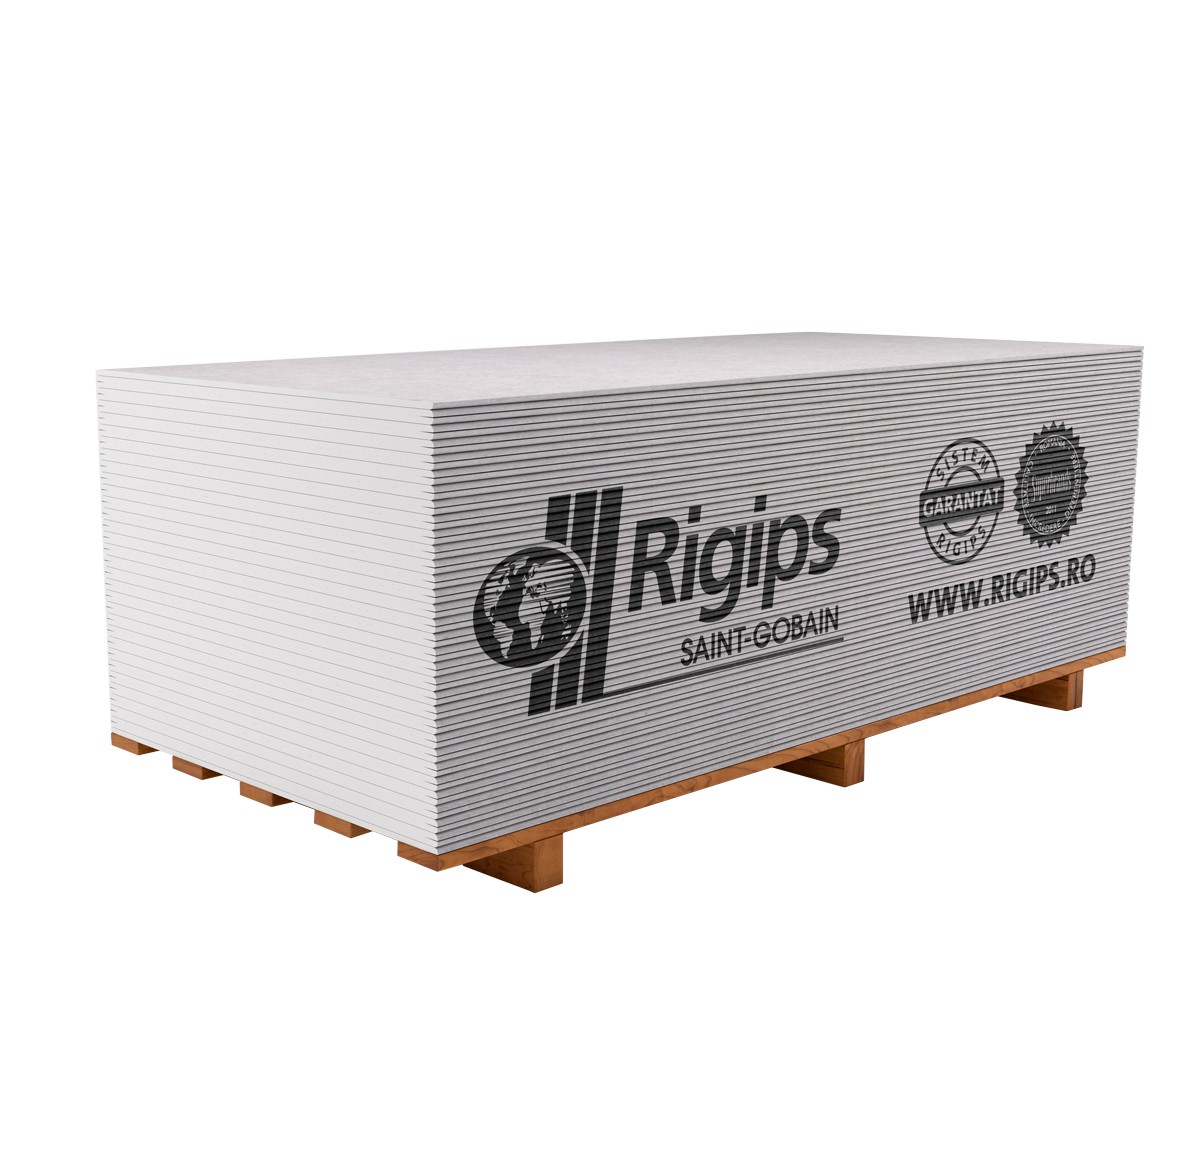 Common drywall tiles - Rigips RB 9.5 x 1200 x 2600 mm, https:maxbau.ro